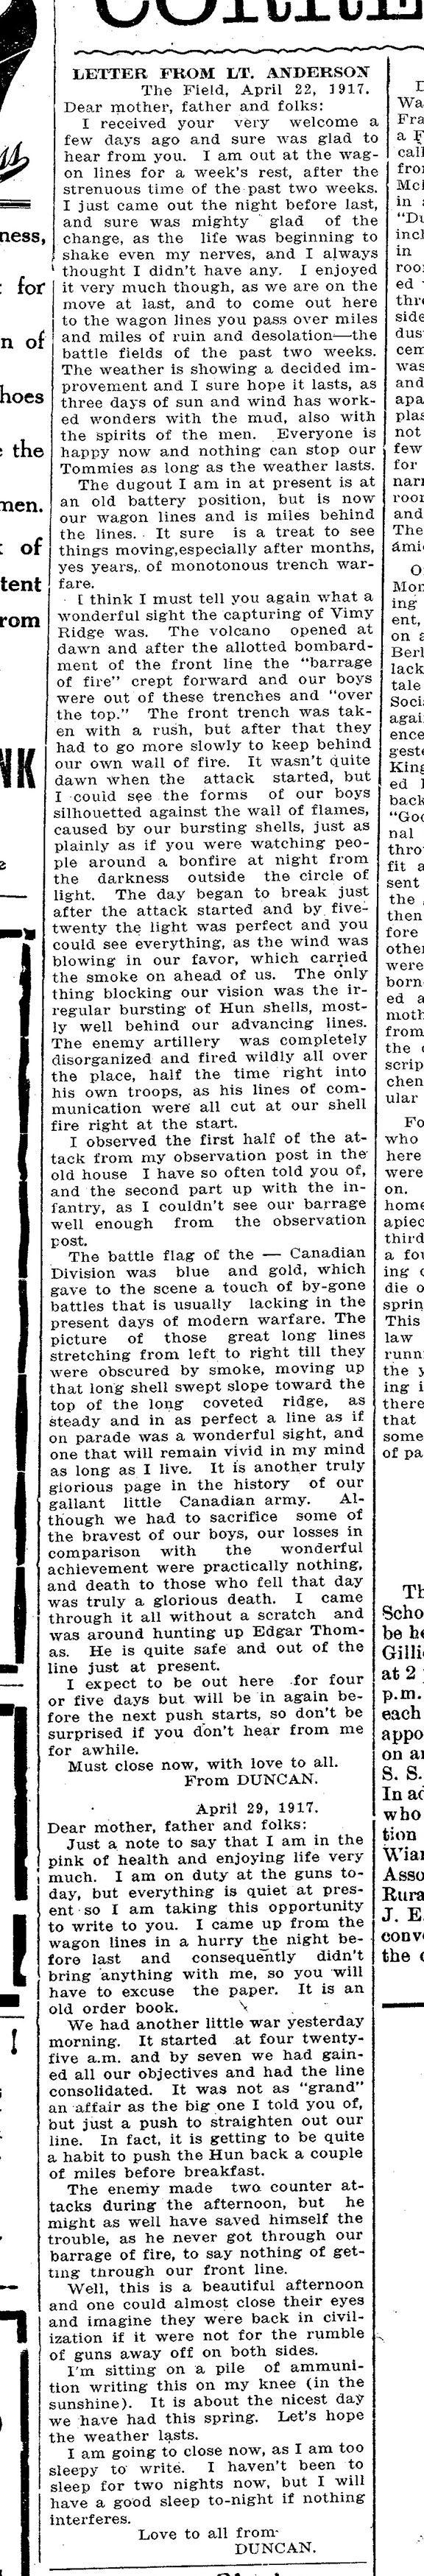 The Chesley Enterprise, June 7, 1917